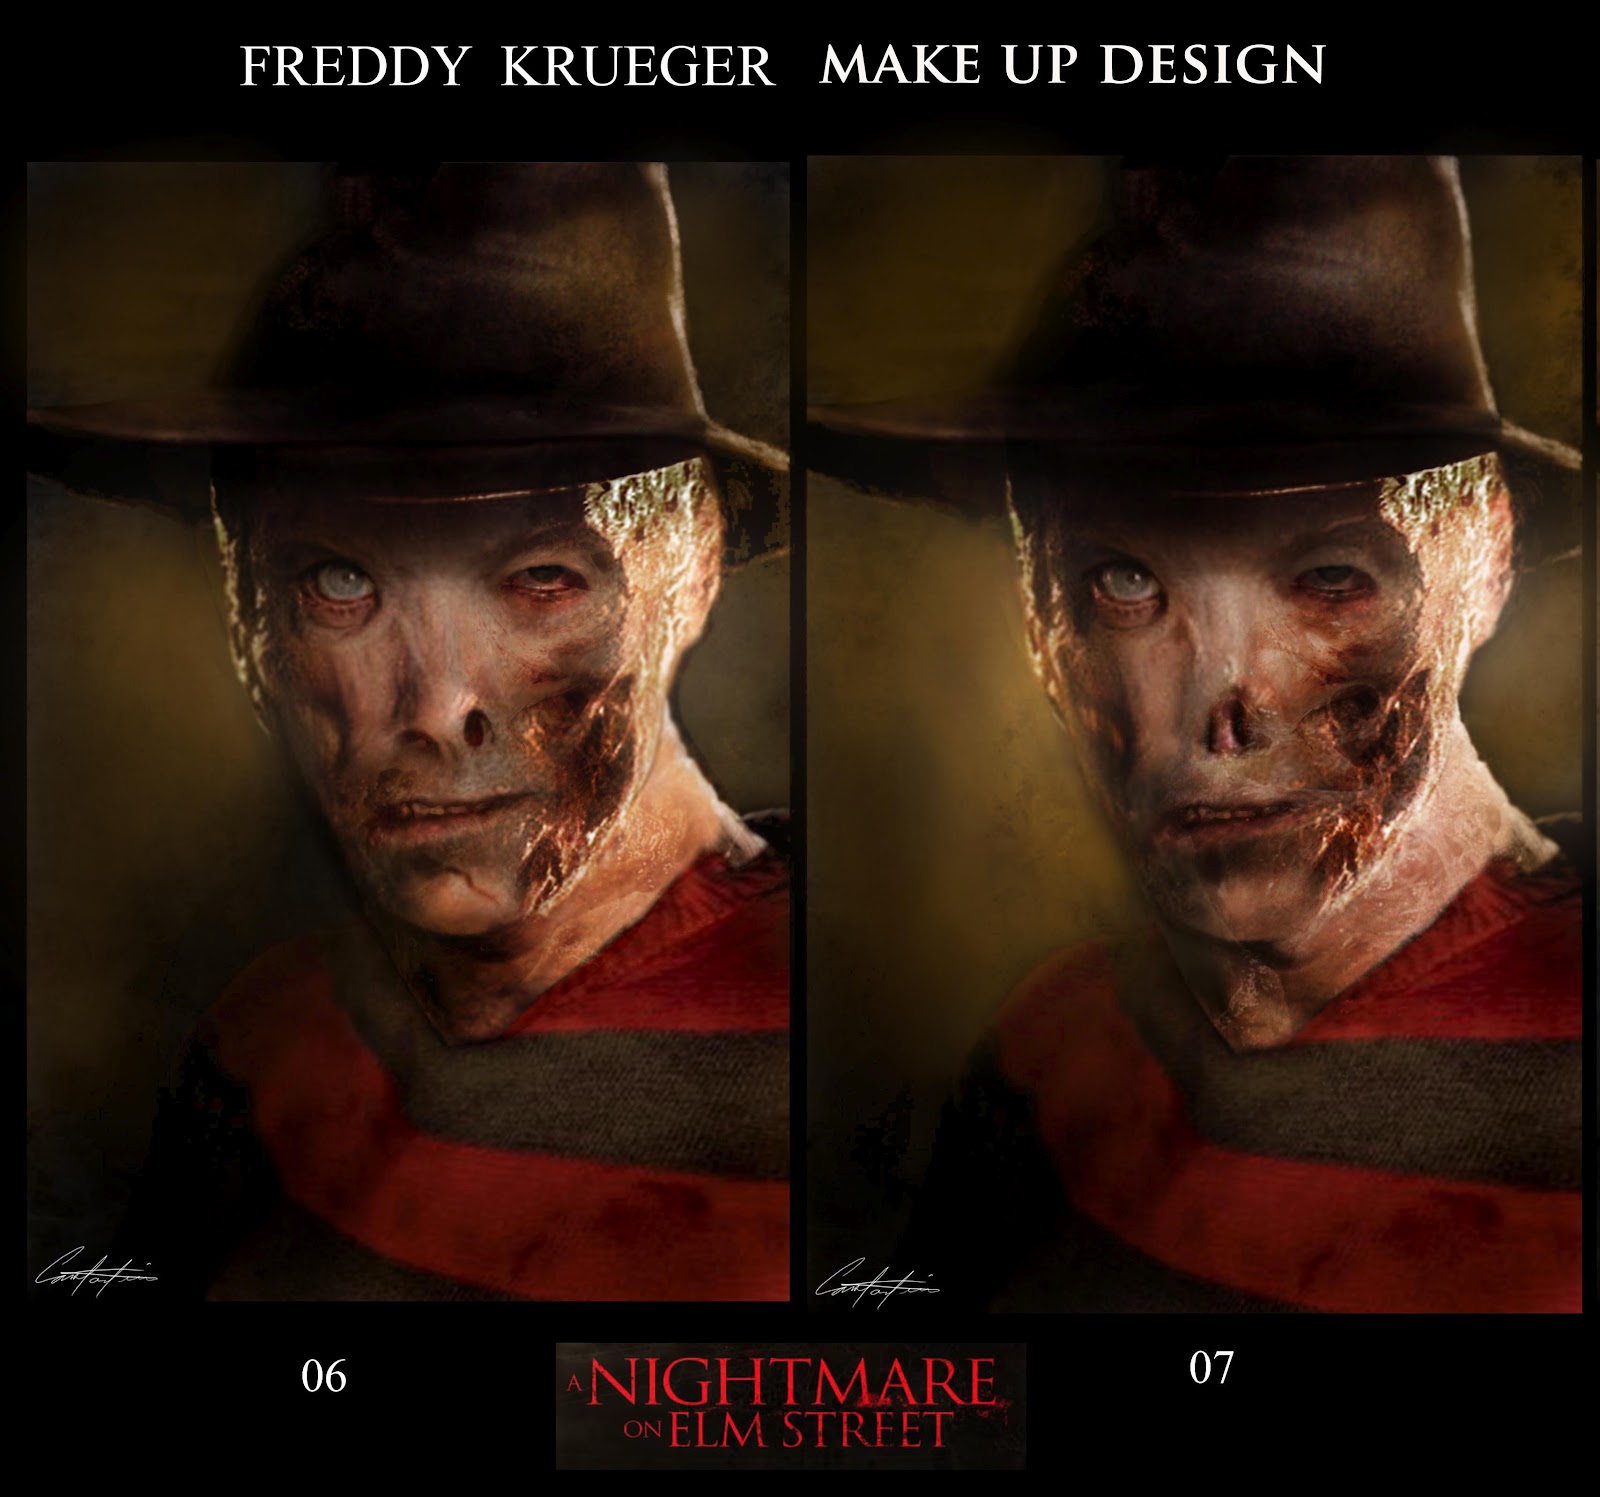 Constantine Sekeris Design Freddy Krueger Makeup Designs.